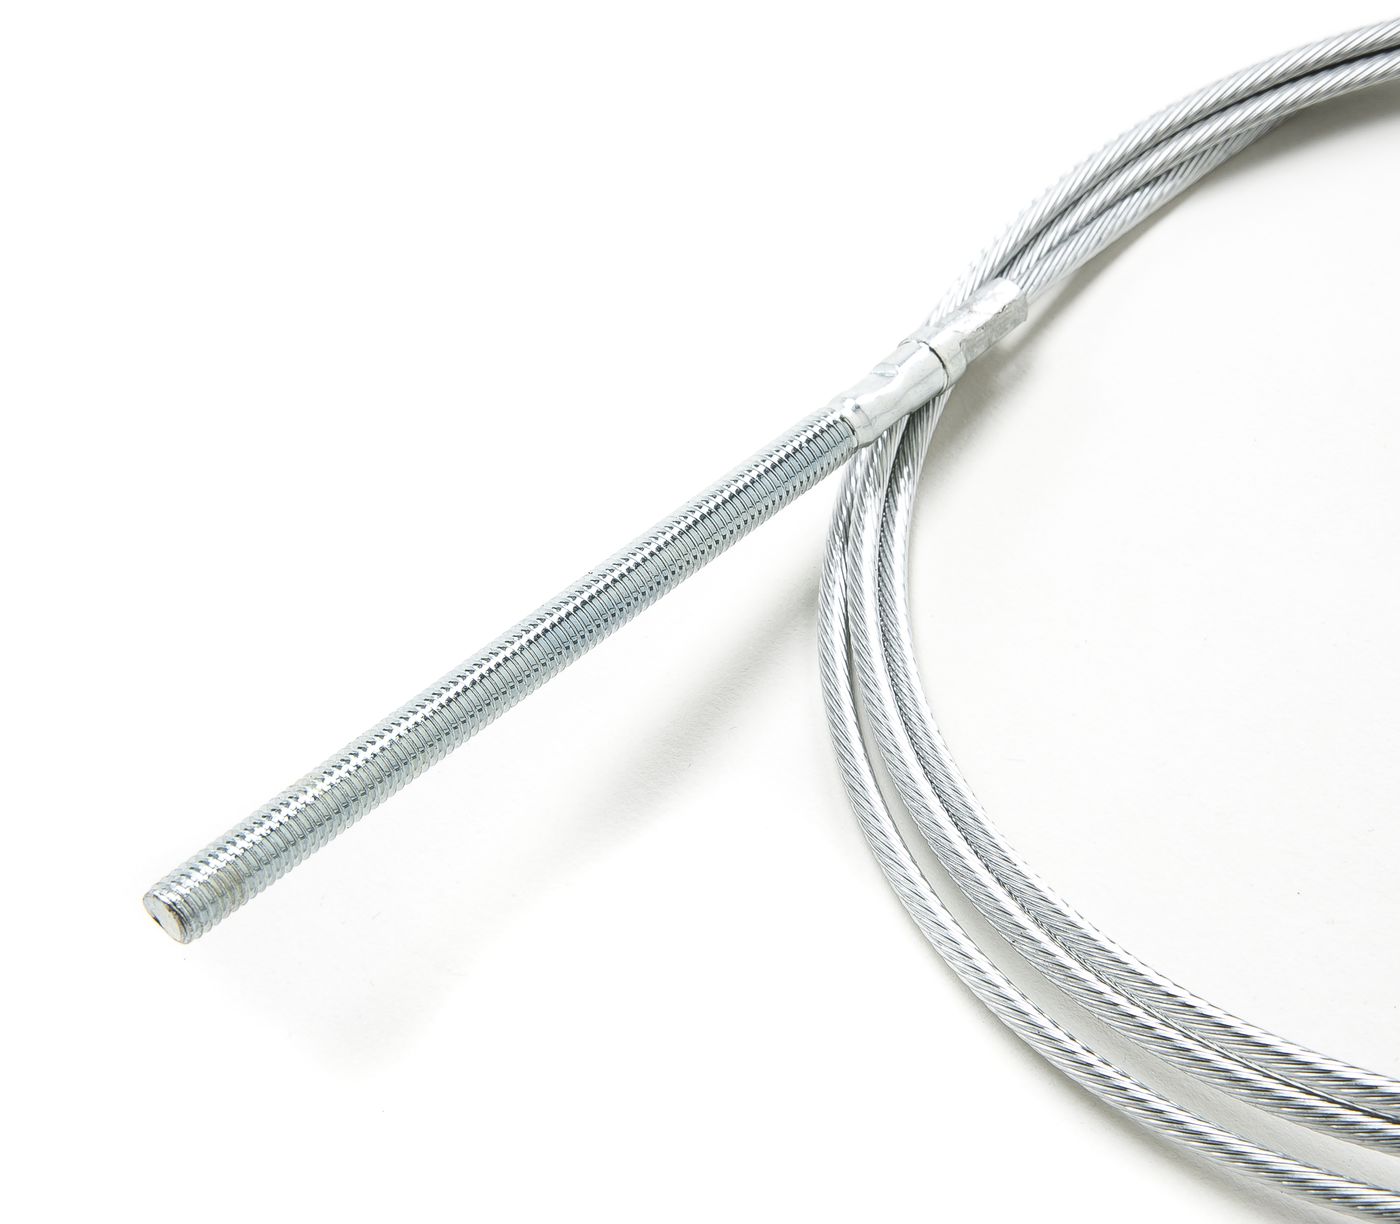 Kupplungszug
Clutch operating cable
Câble d'embrayage
Cavo di f